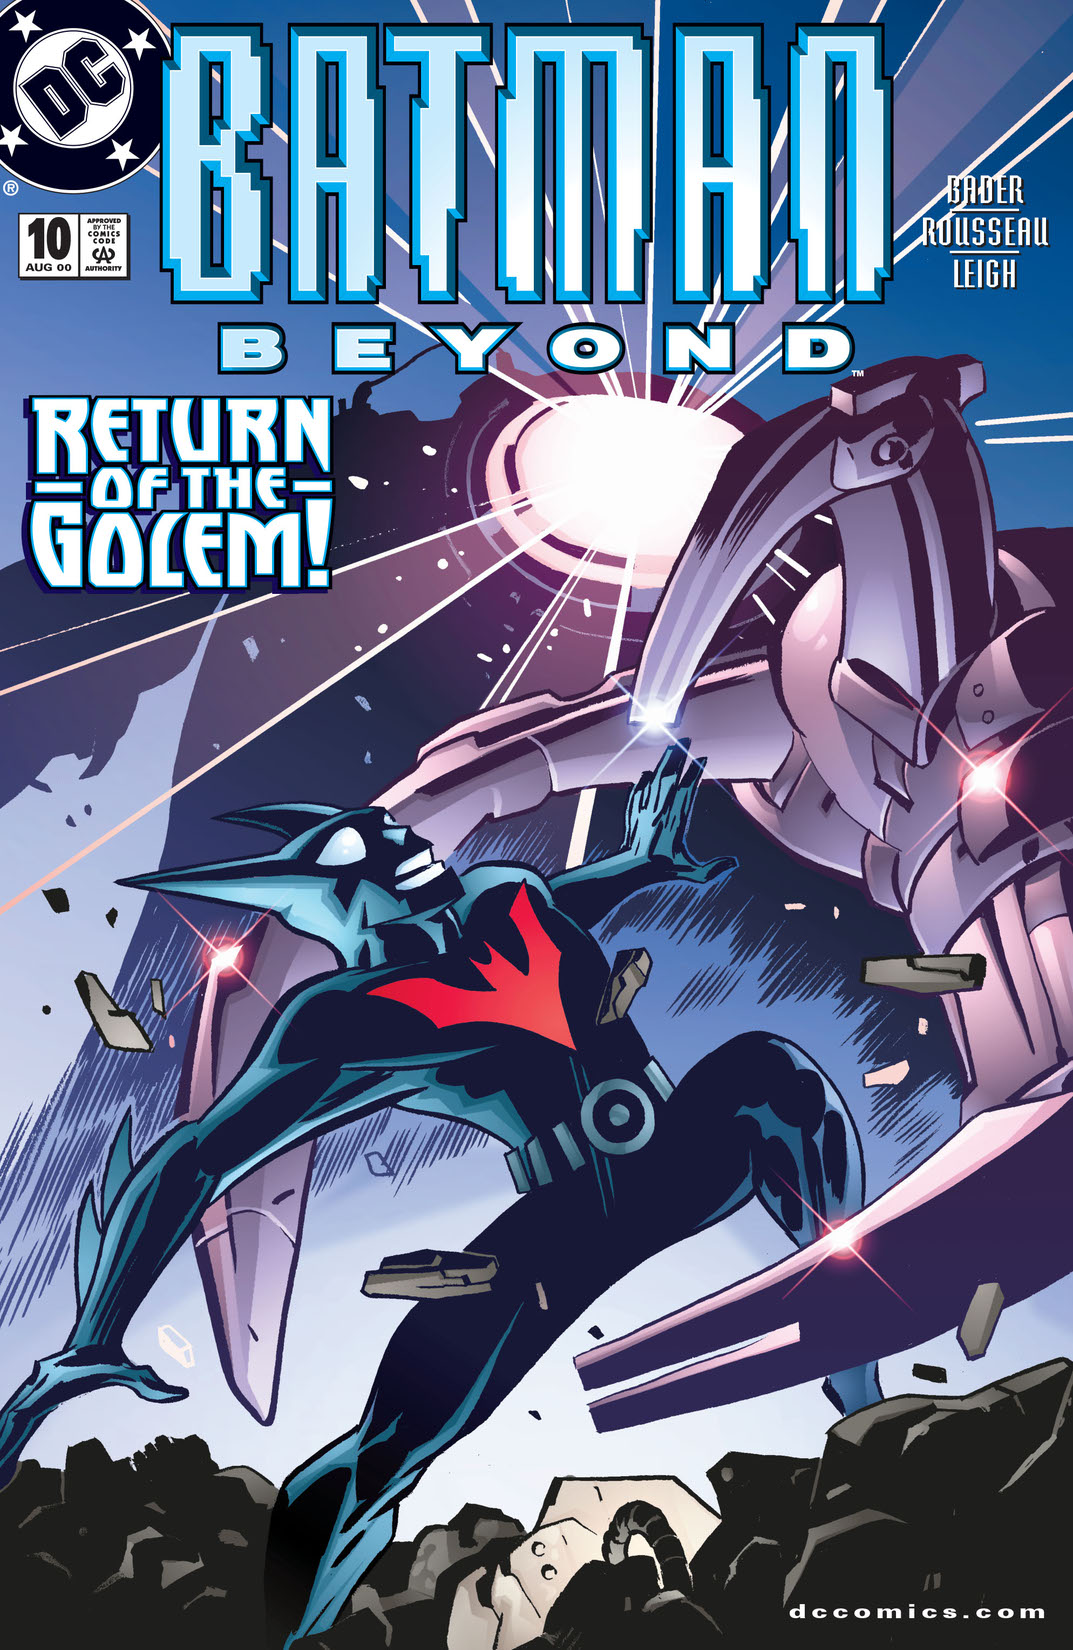 Batman Beyond (1999-) #10 preview images